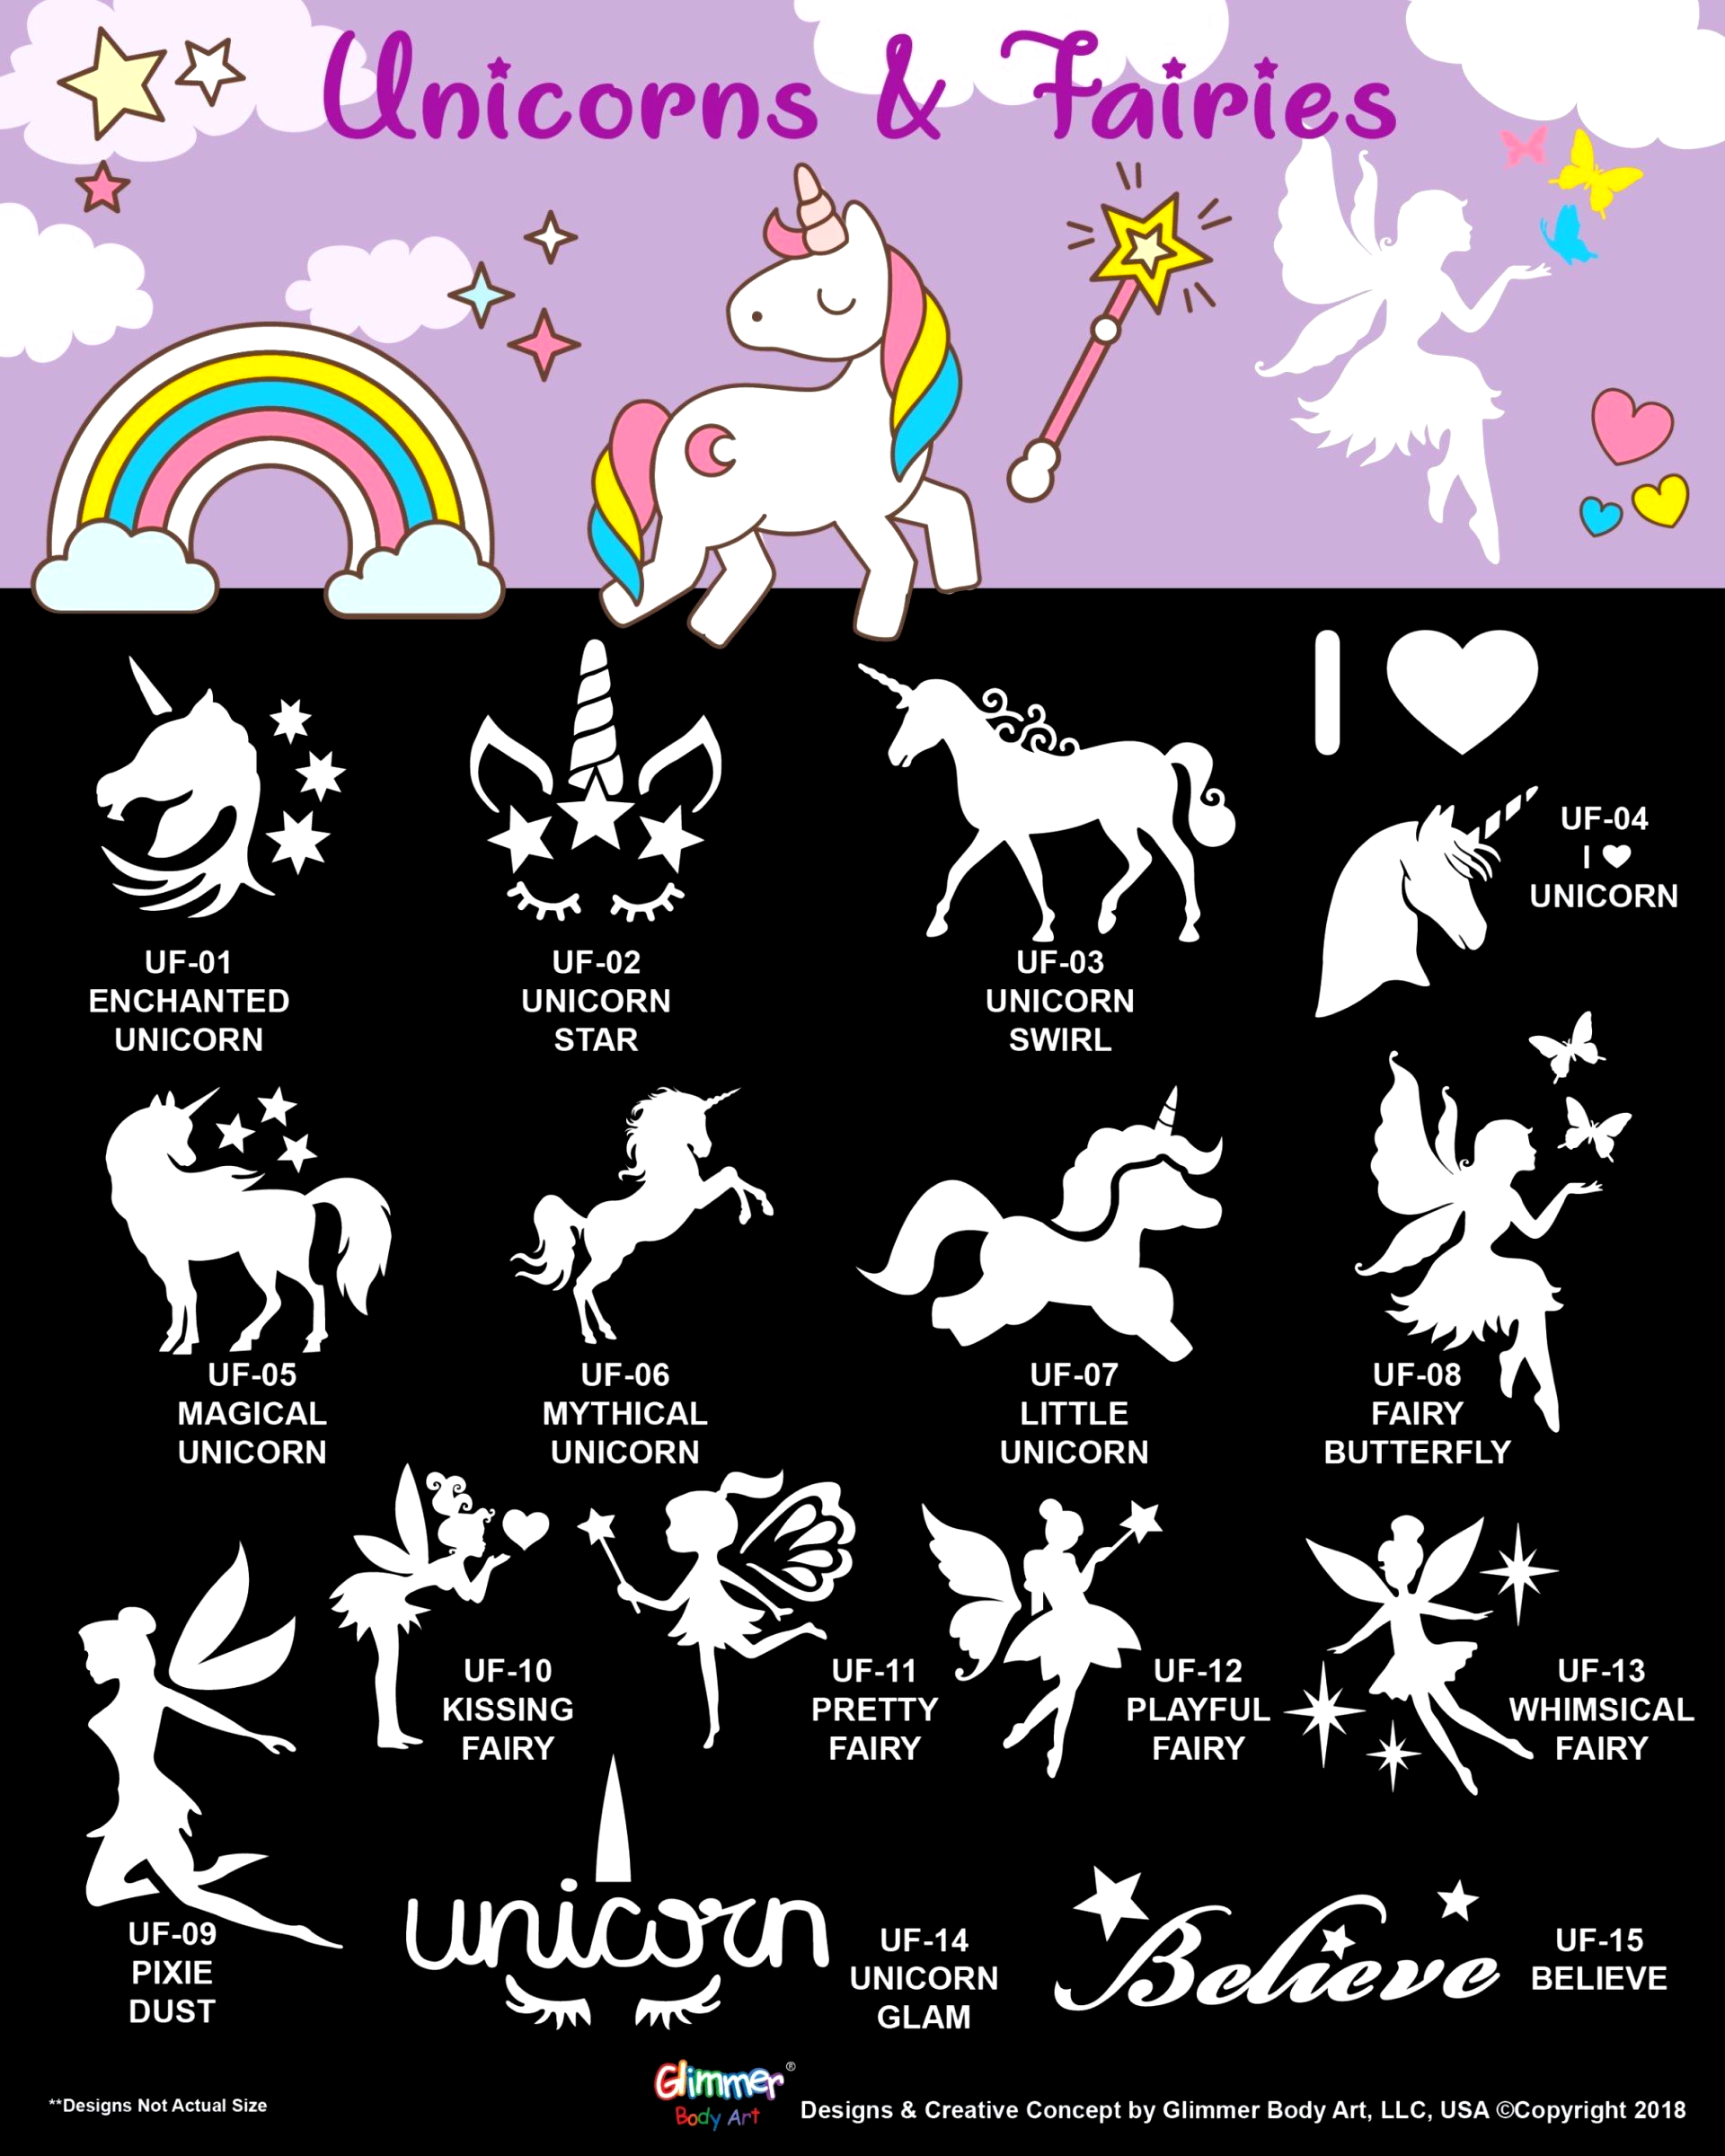 Unicorn and Fairies Tattoos